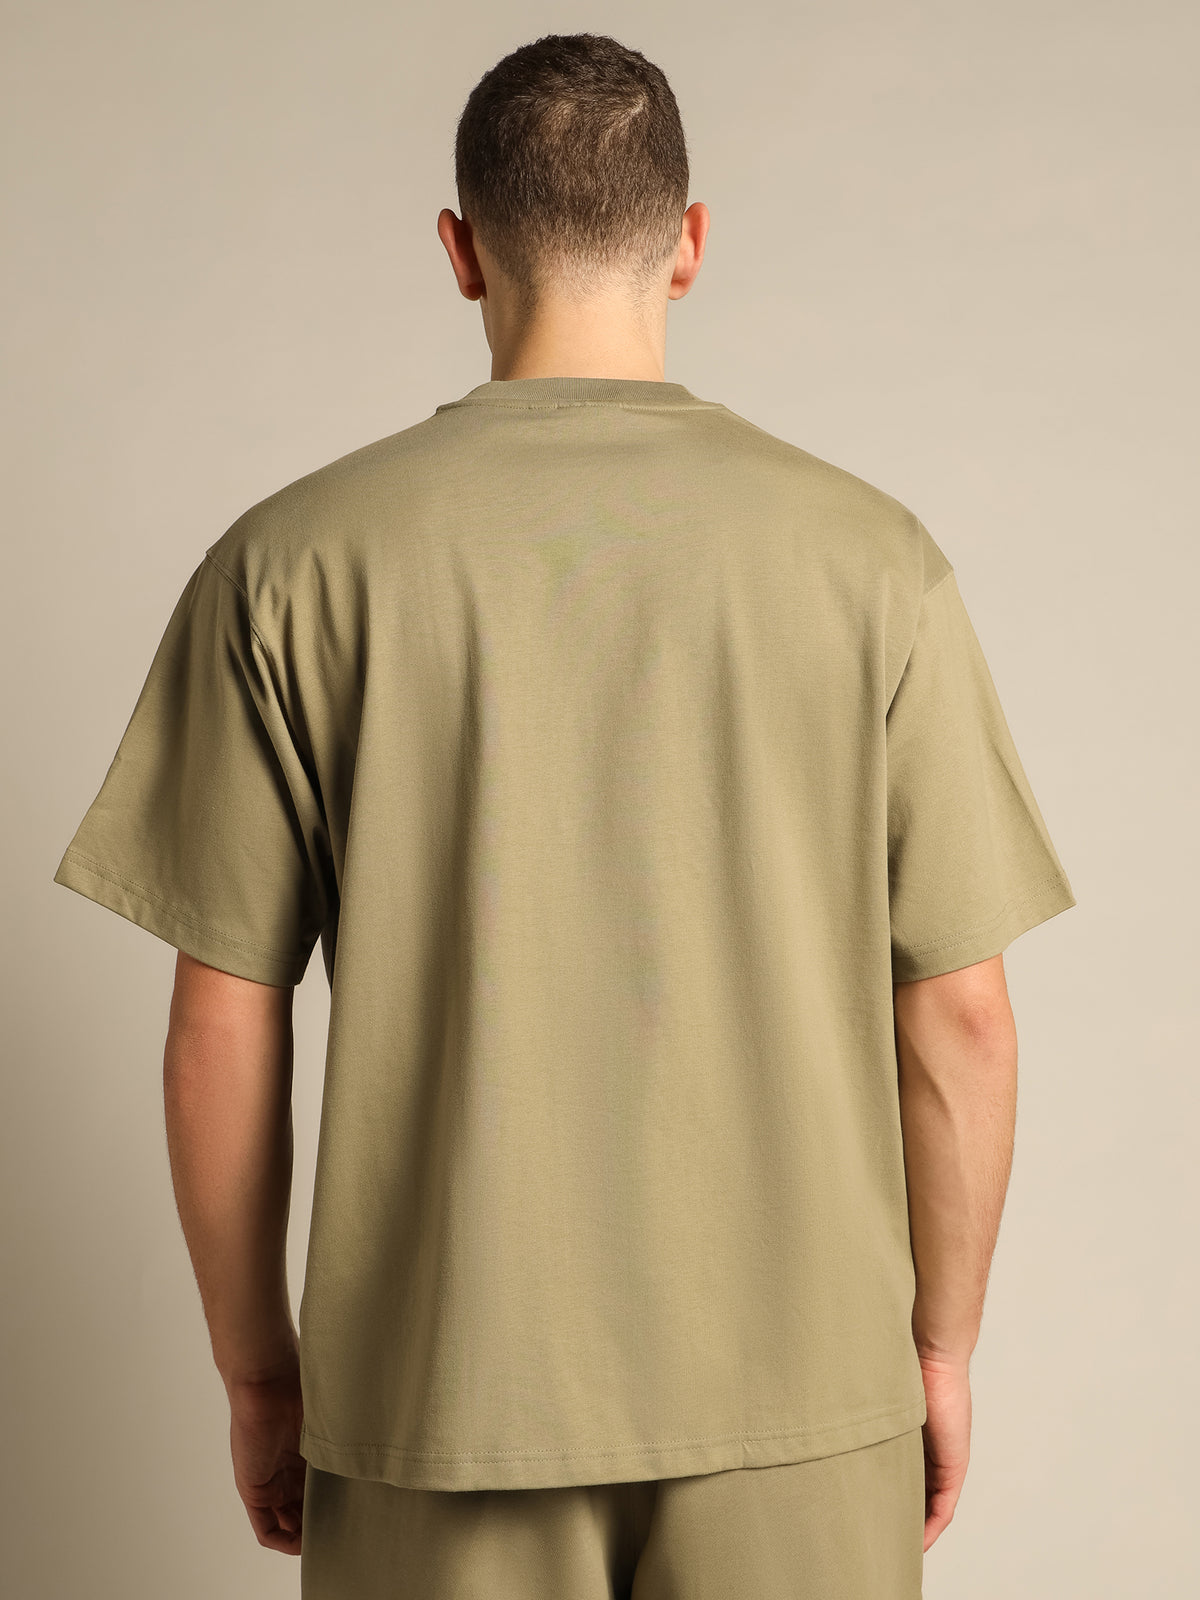 Adicolor Trefoil T-Shirt in Olive Green